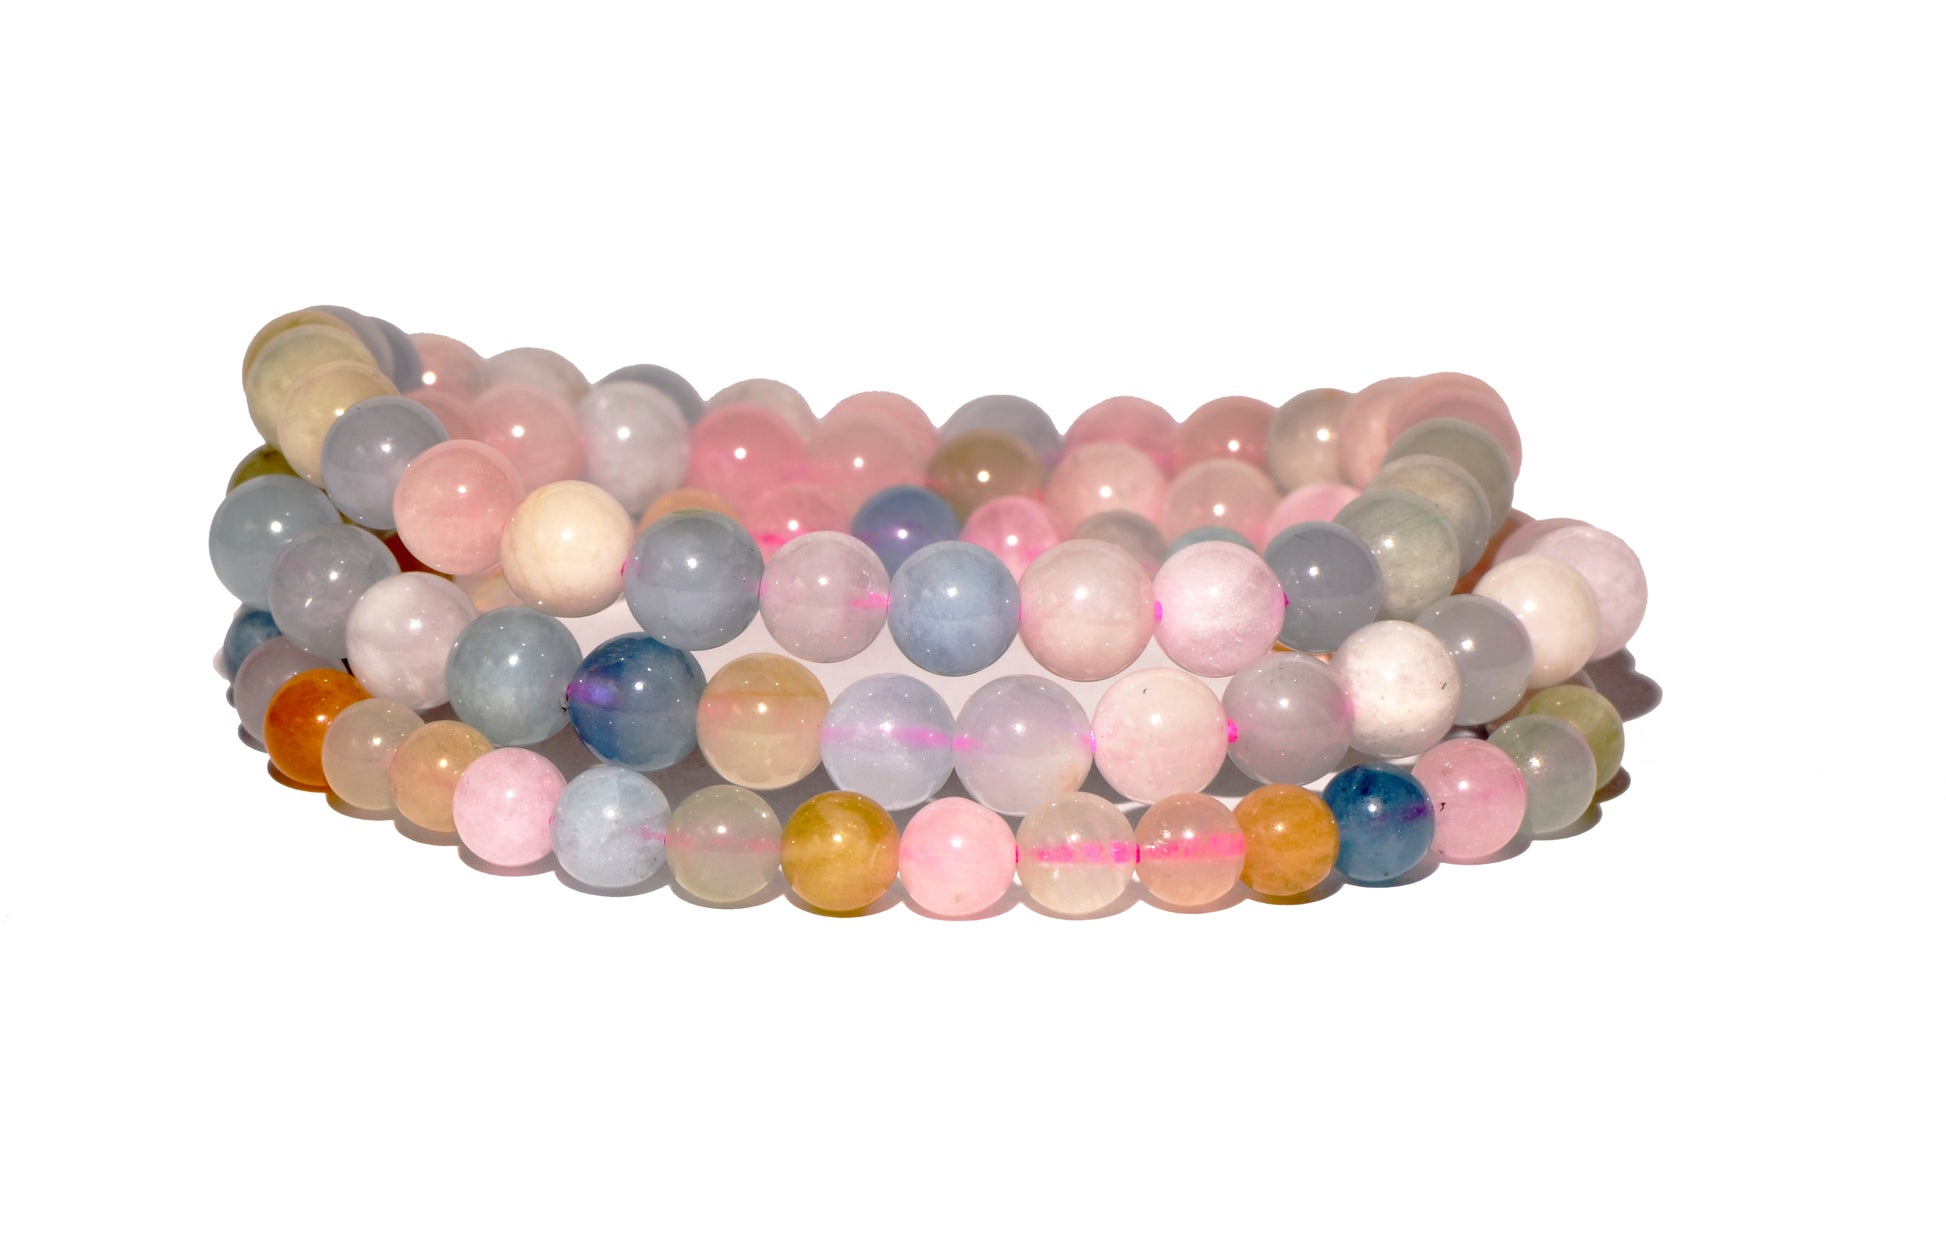 Morganite Beaded Bracelet - Small Beads - Polished